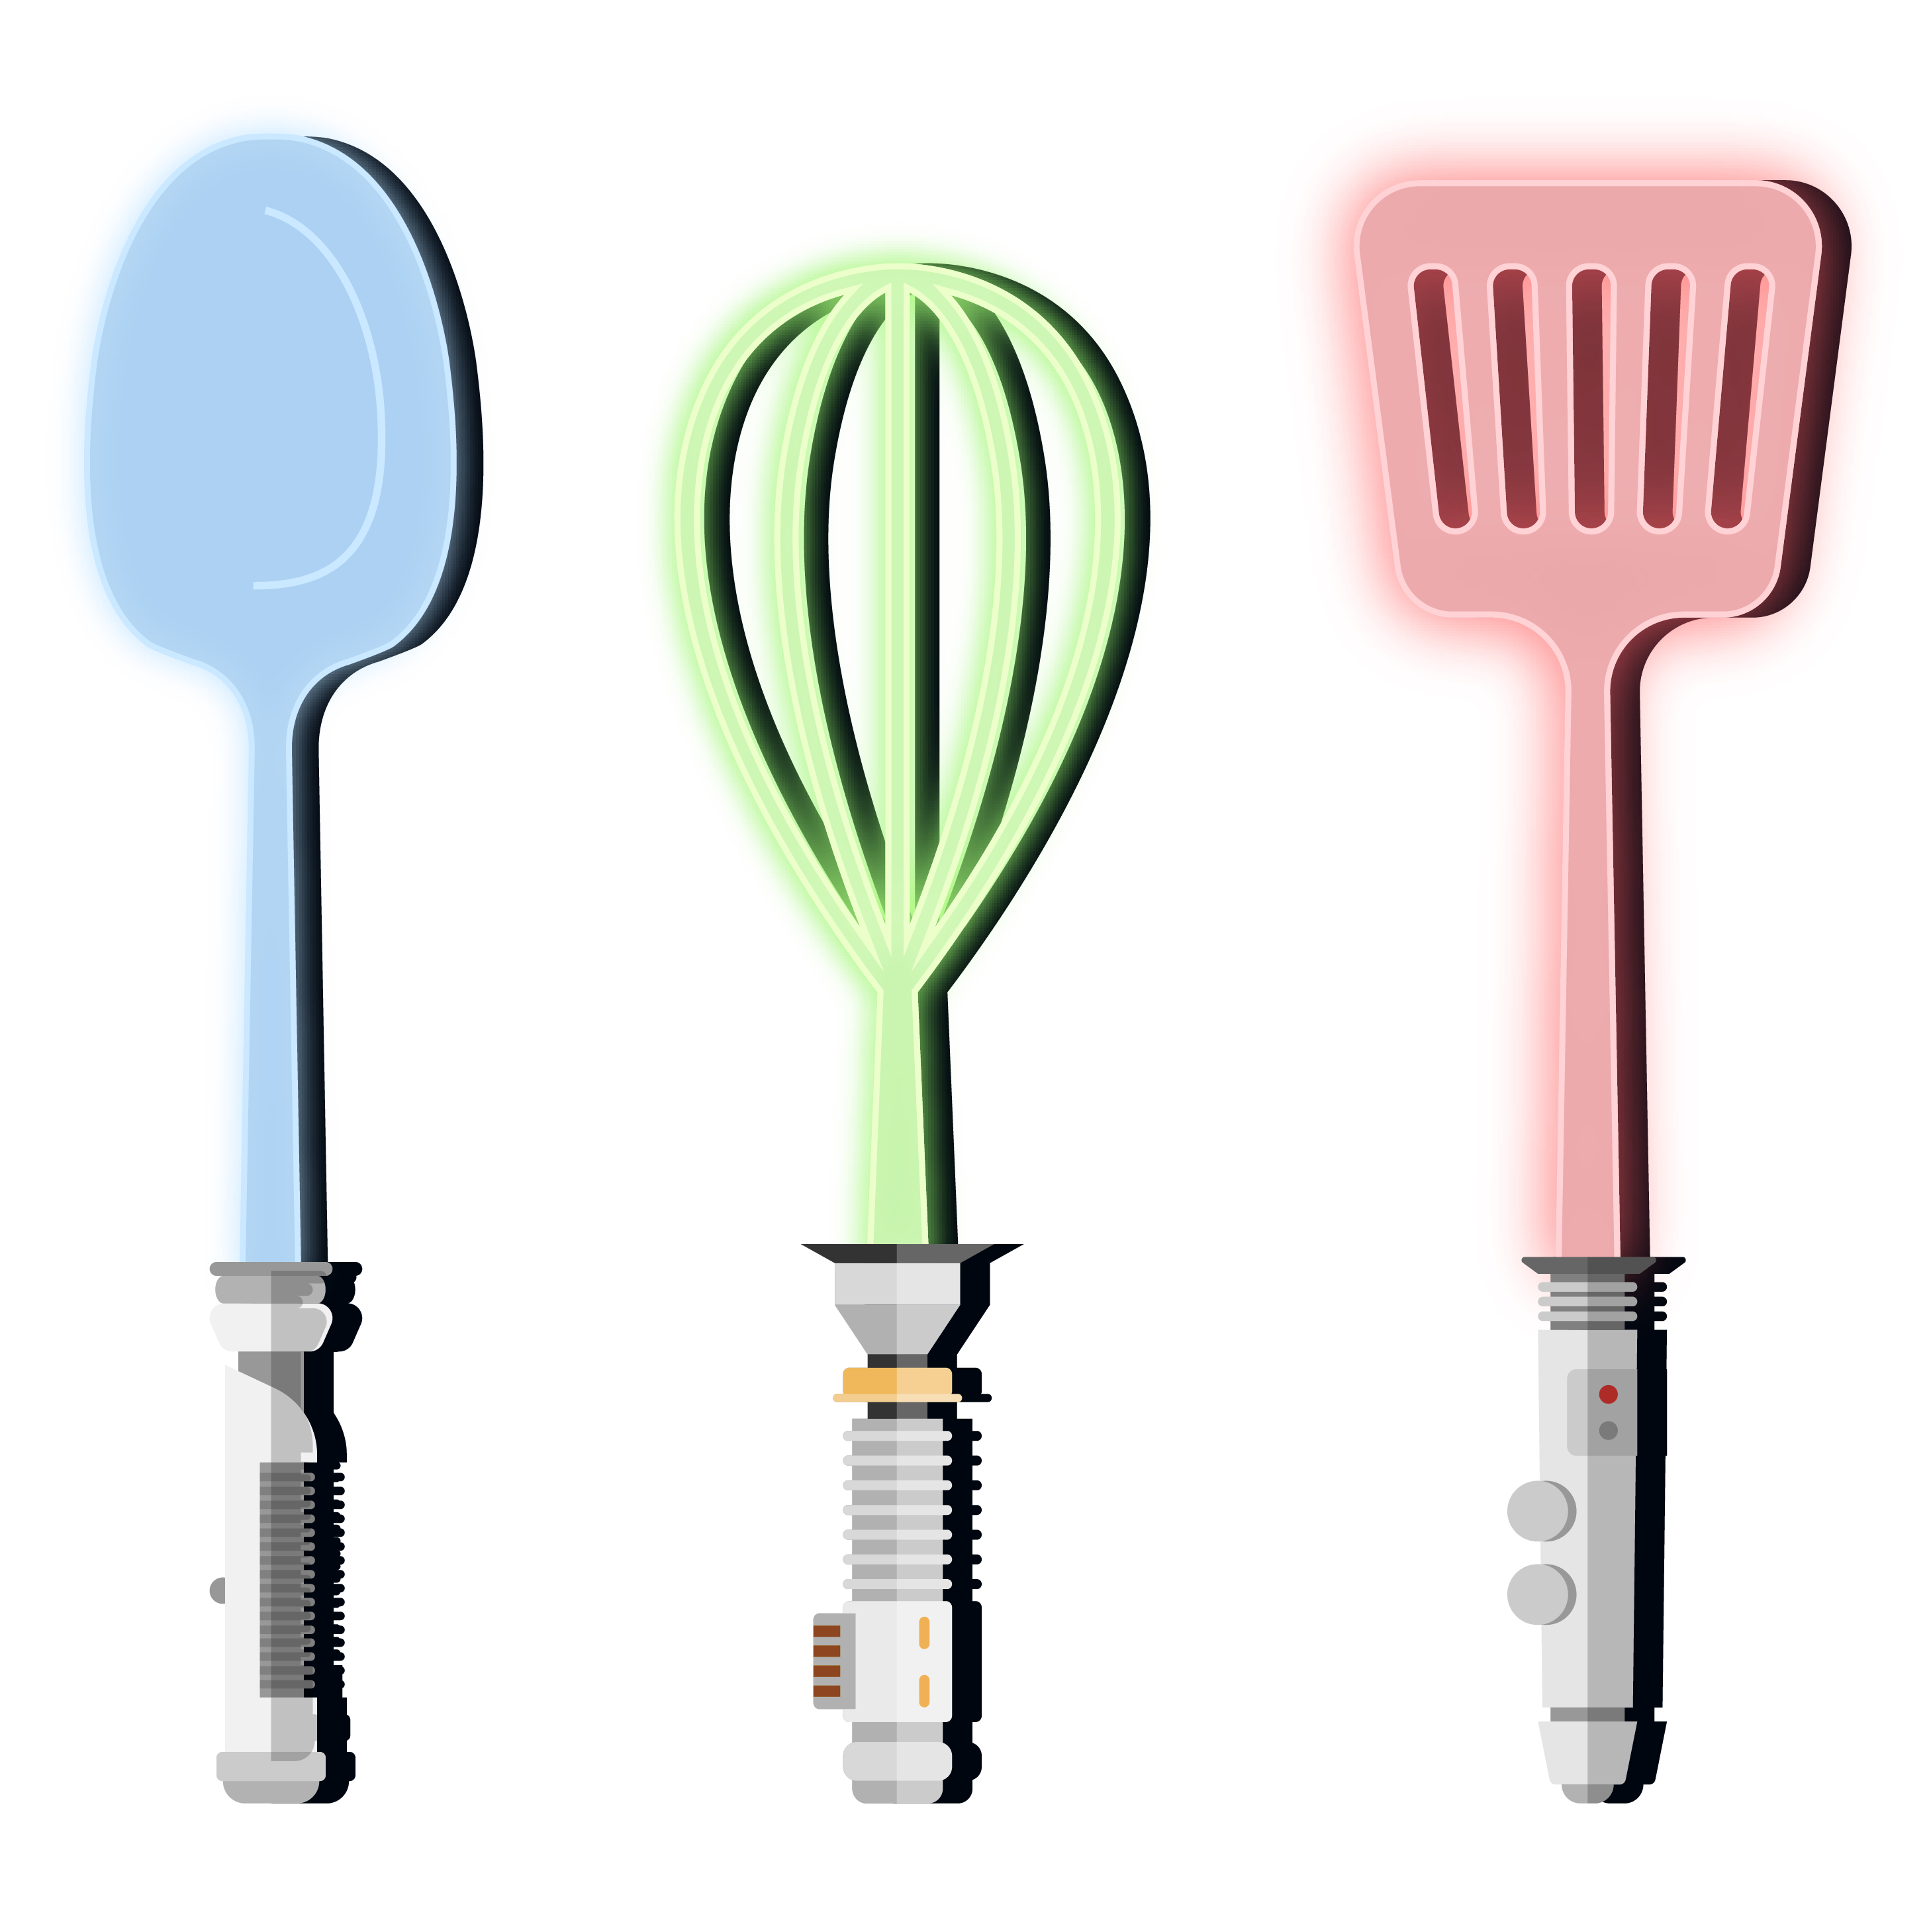 lightsabers in the shape of utensils